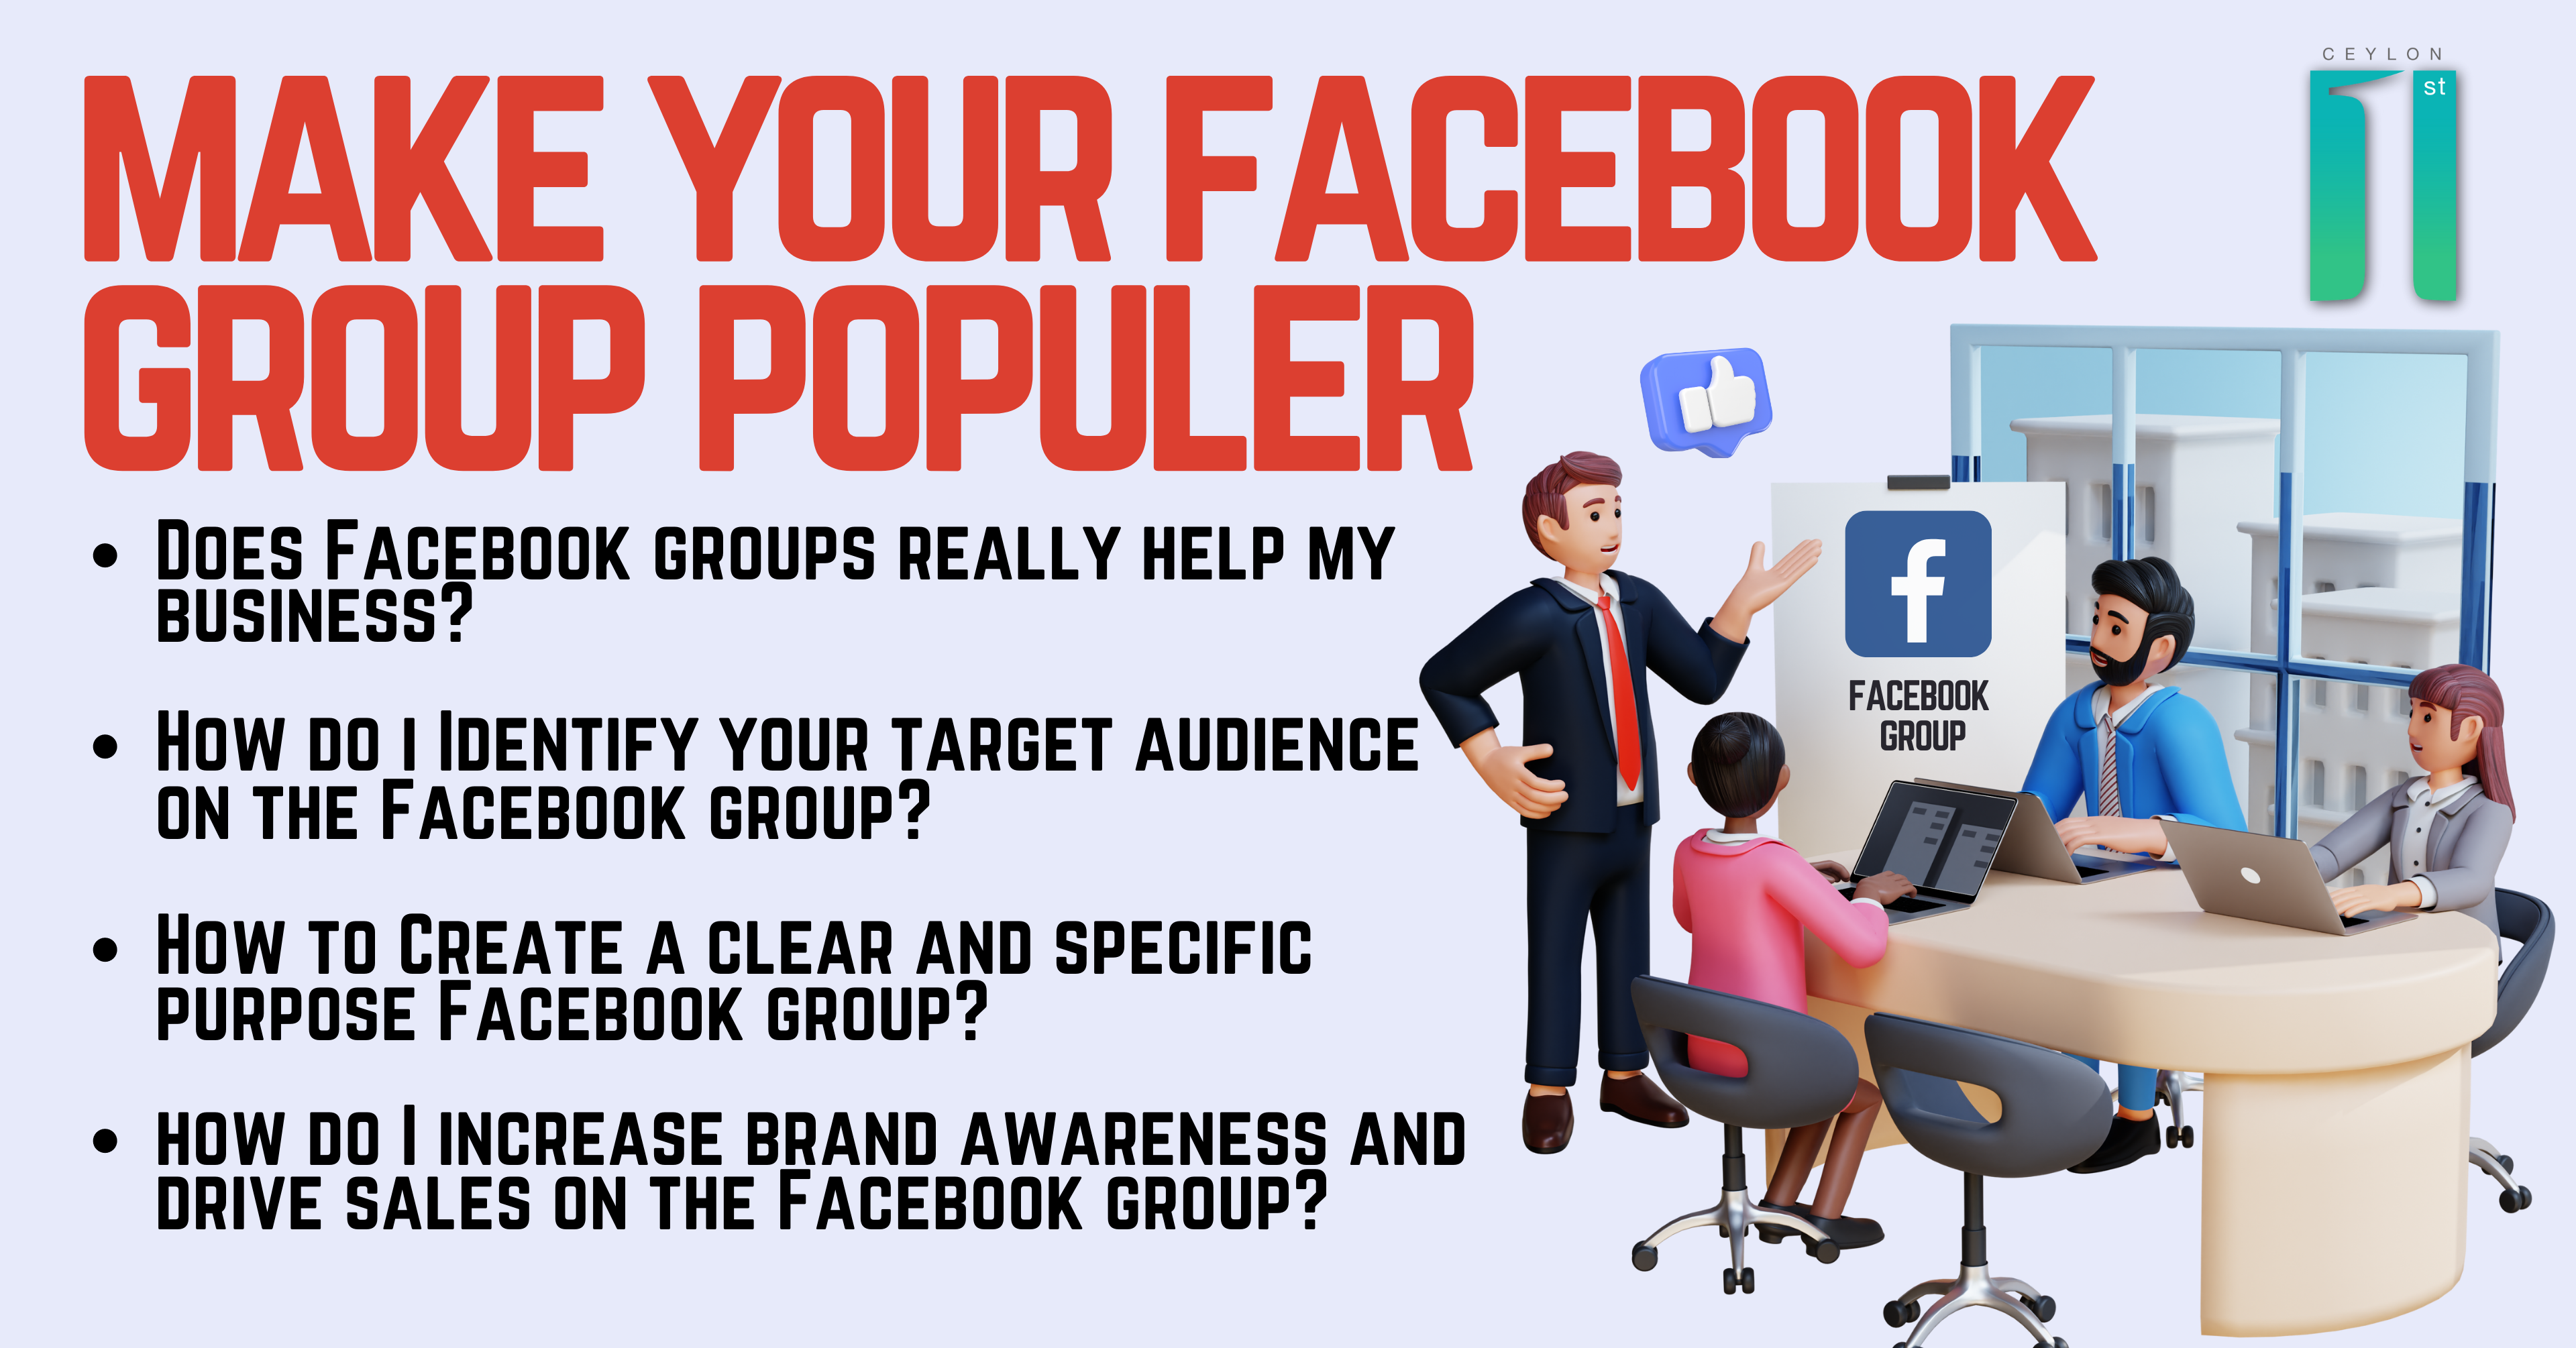 Make Your Facebook Group Popular